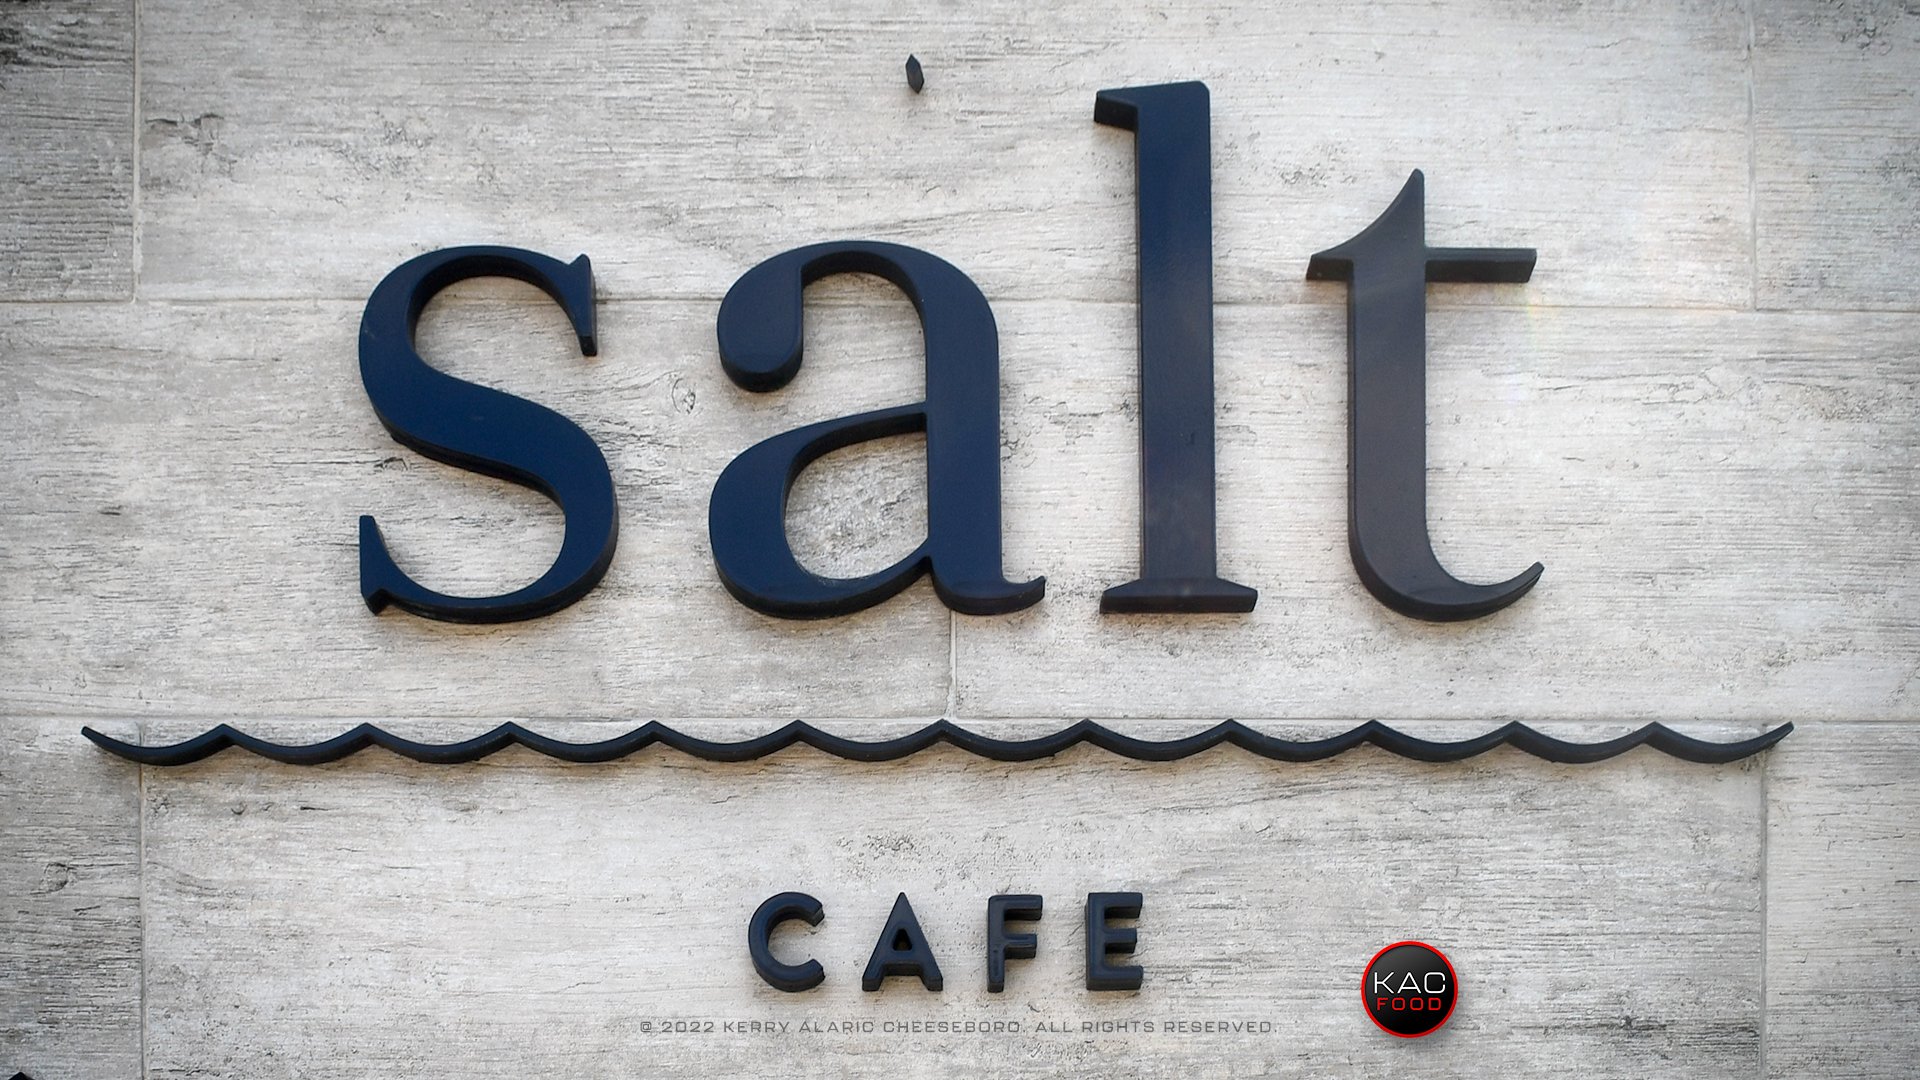 kac_food-220106-salt-cafe-signage-1-1920-hor.jpg